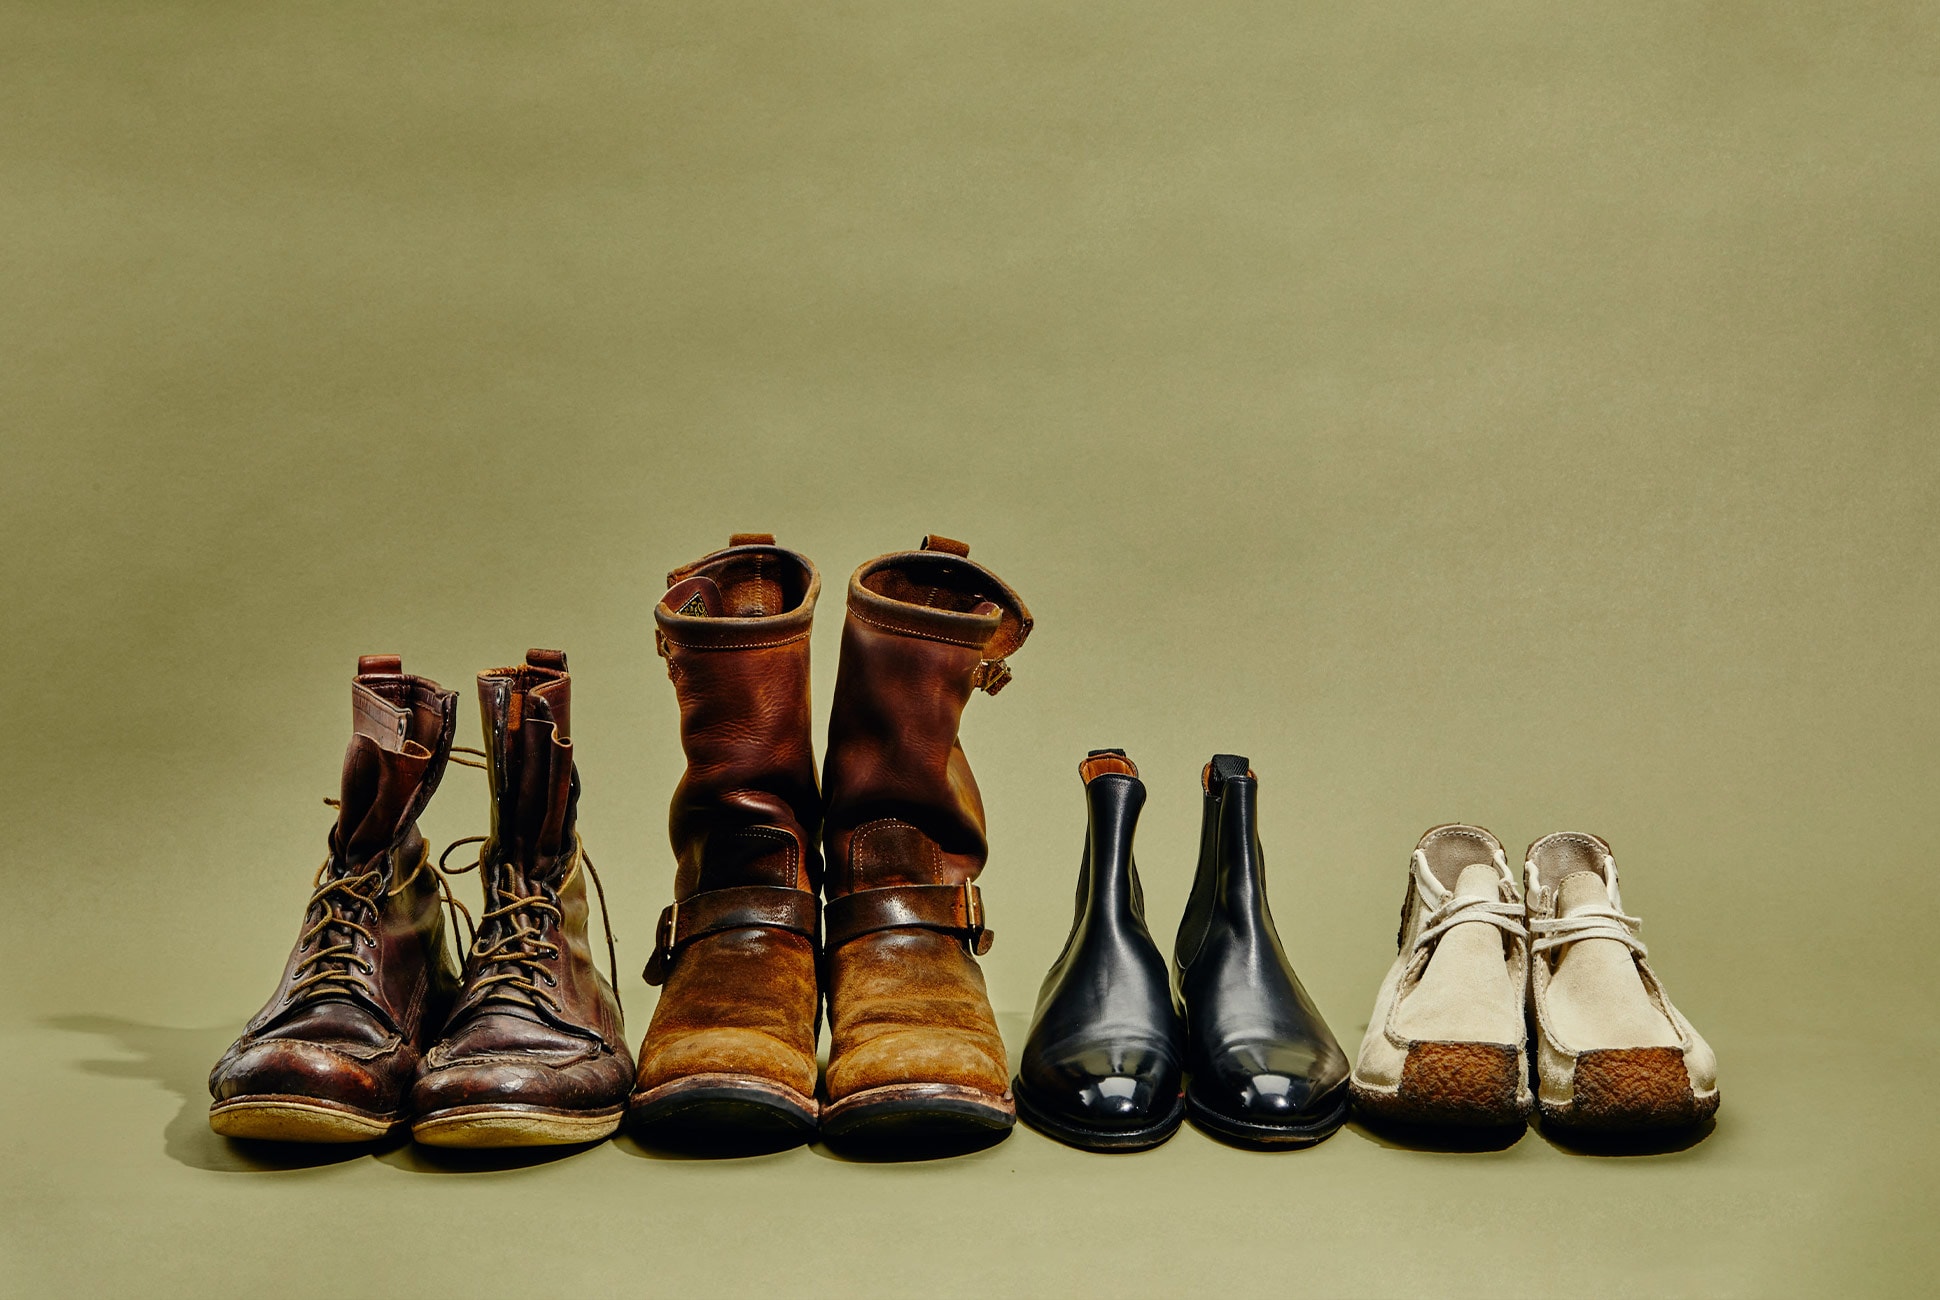 most stylish boots